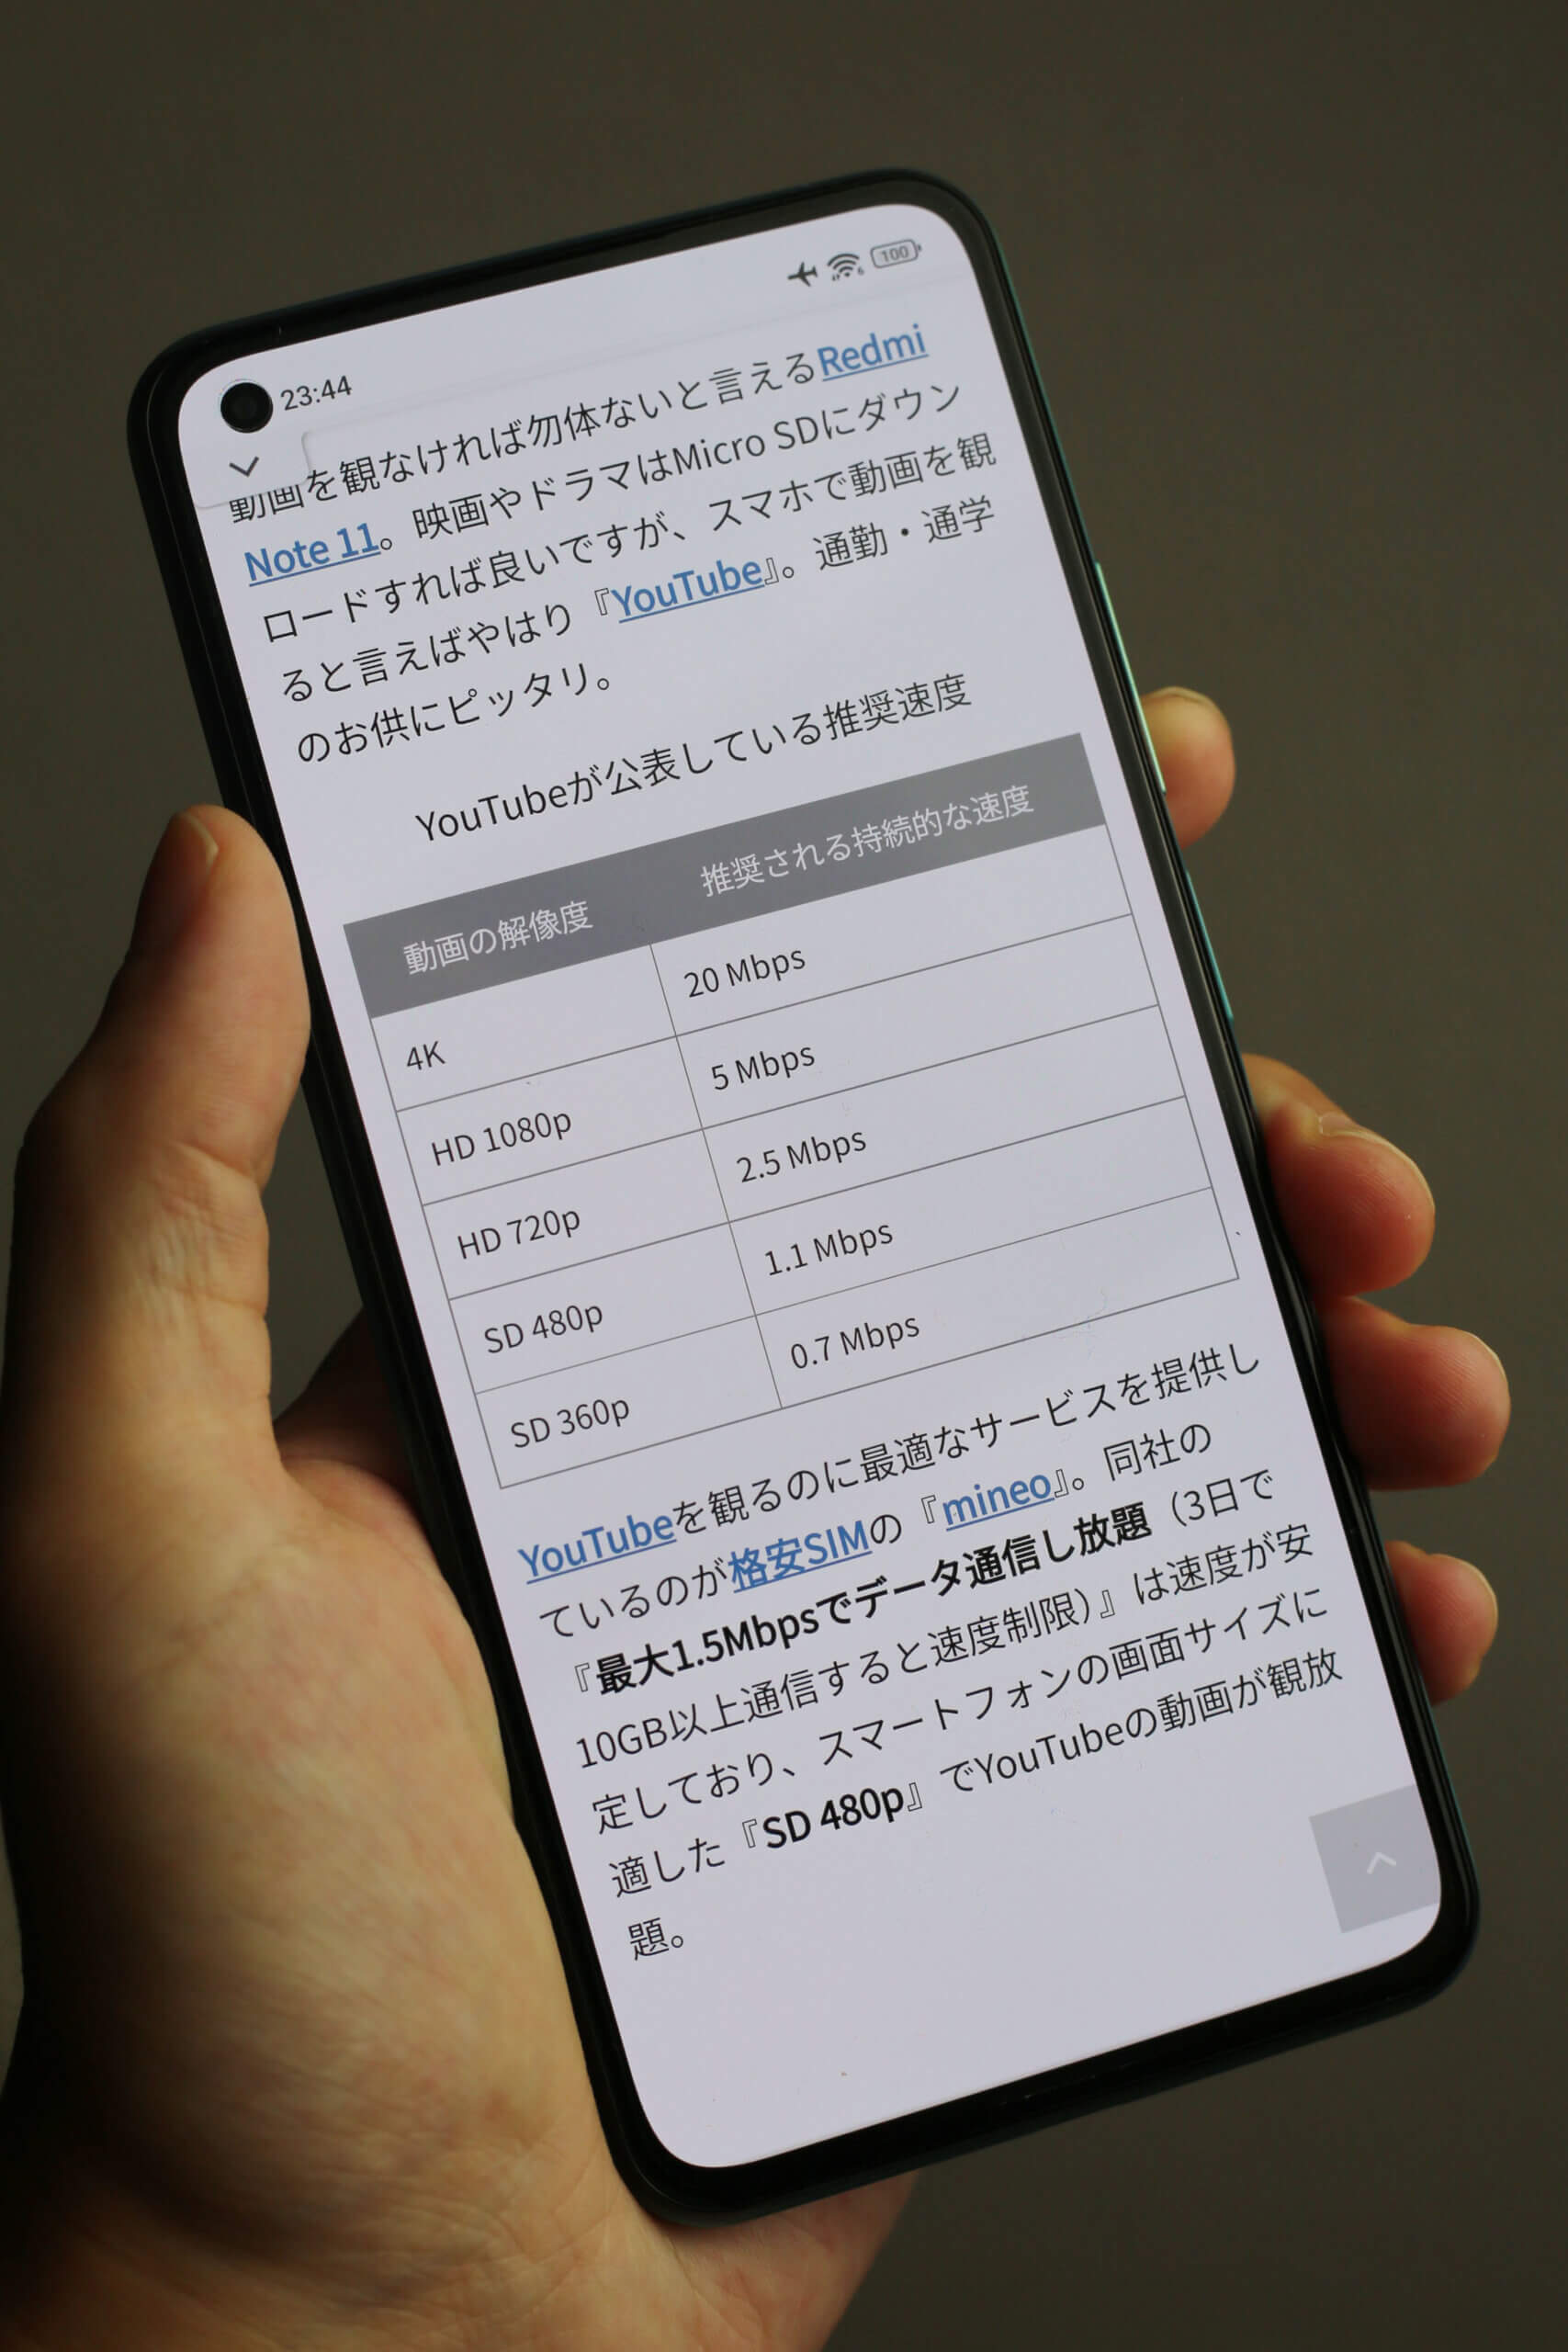 Xiaomi Mi11 Ultra 12/256 期間限定値下げ 早い者勝ち‼️